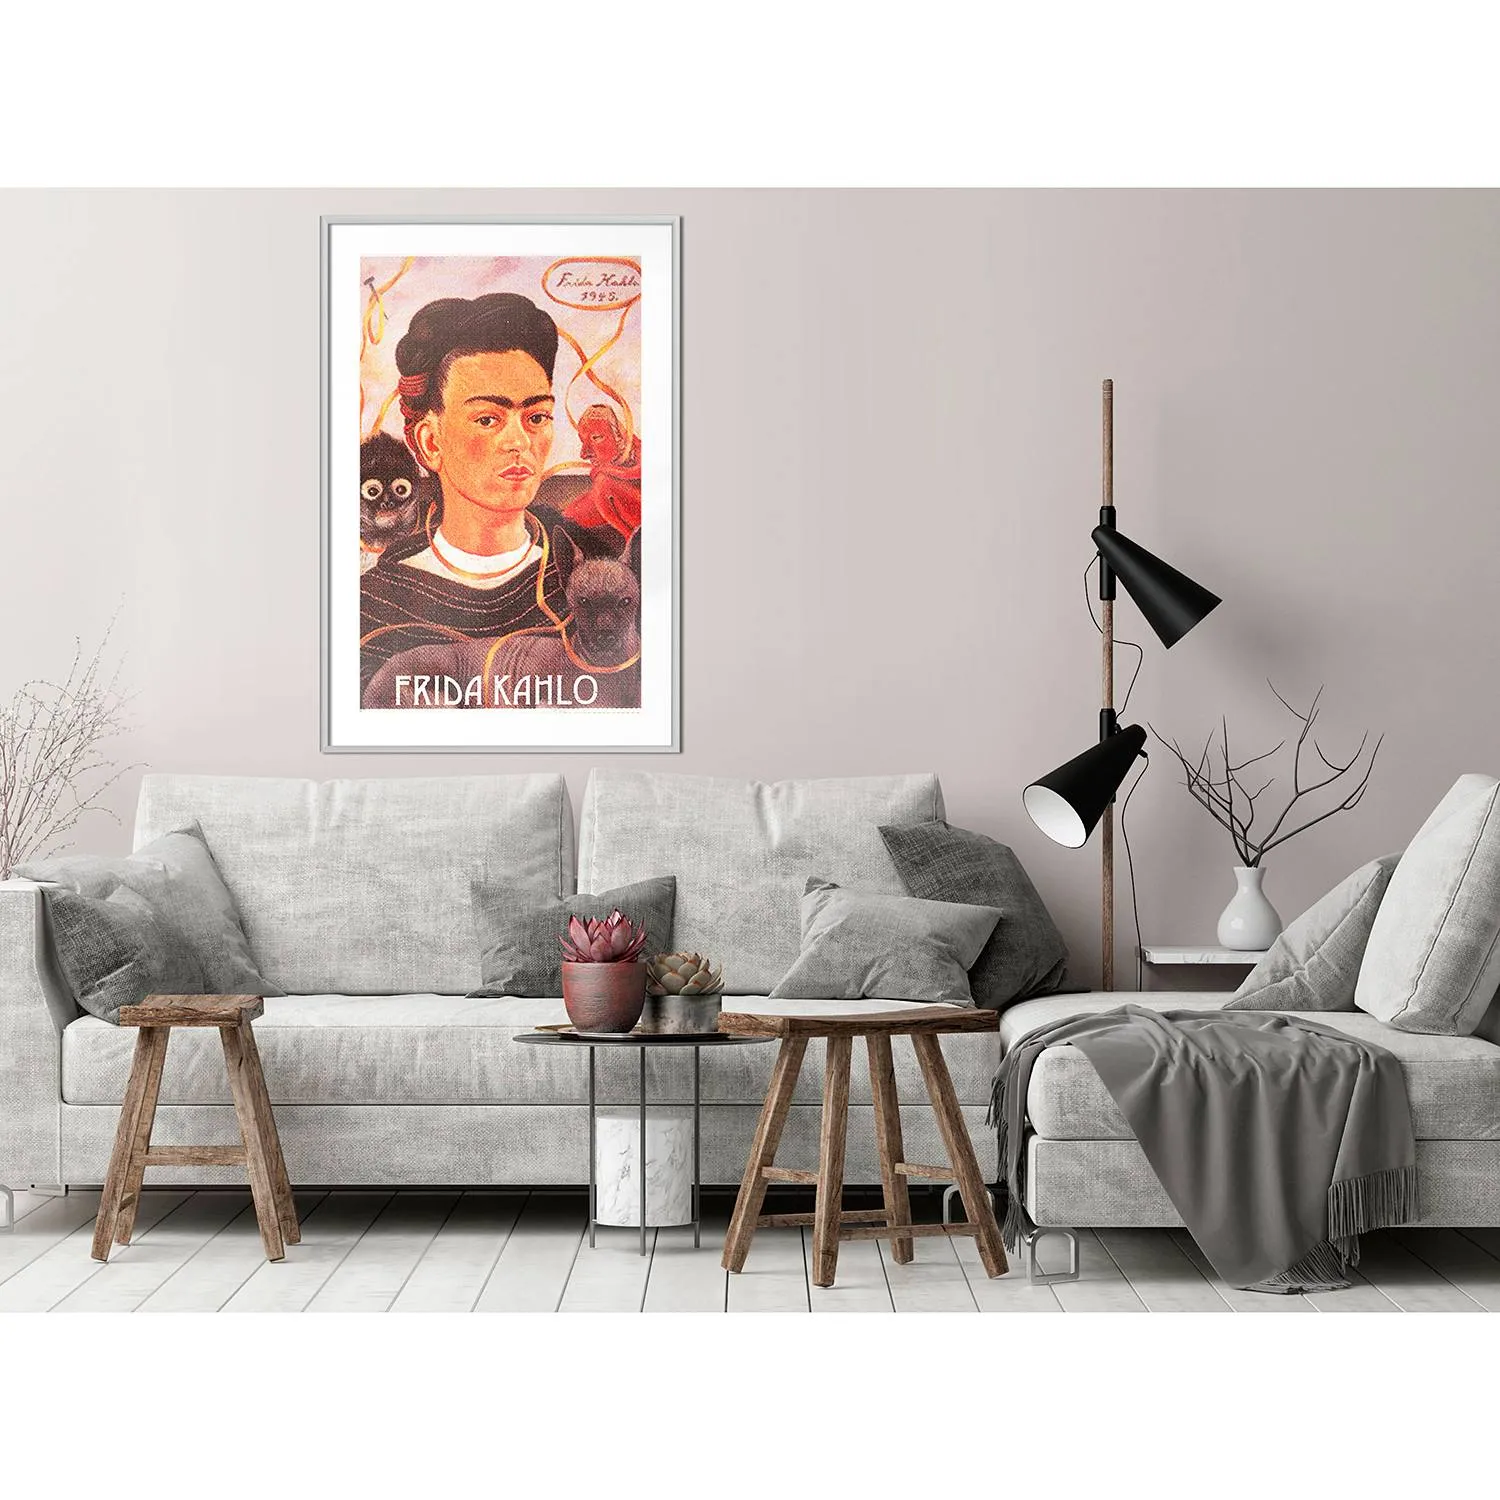 Cornice e poster Frida Kahlo, 